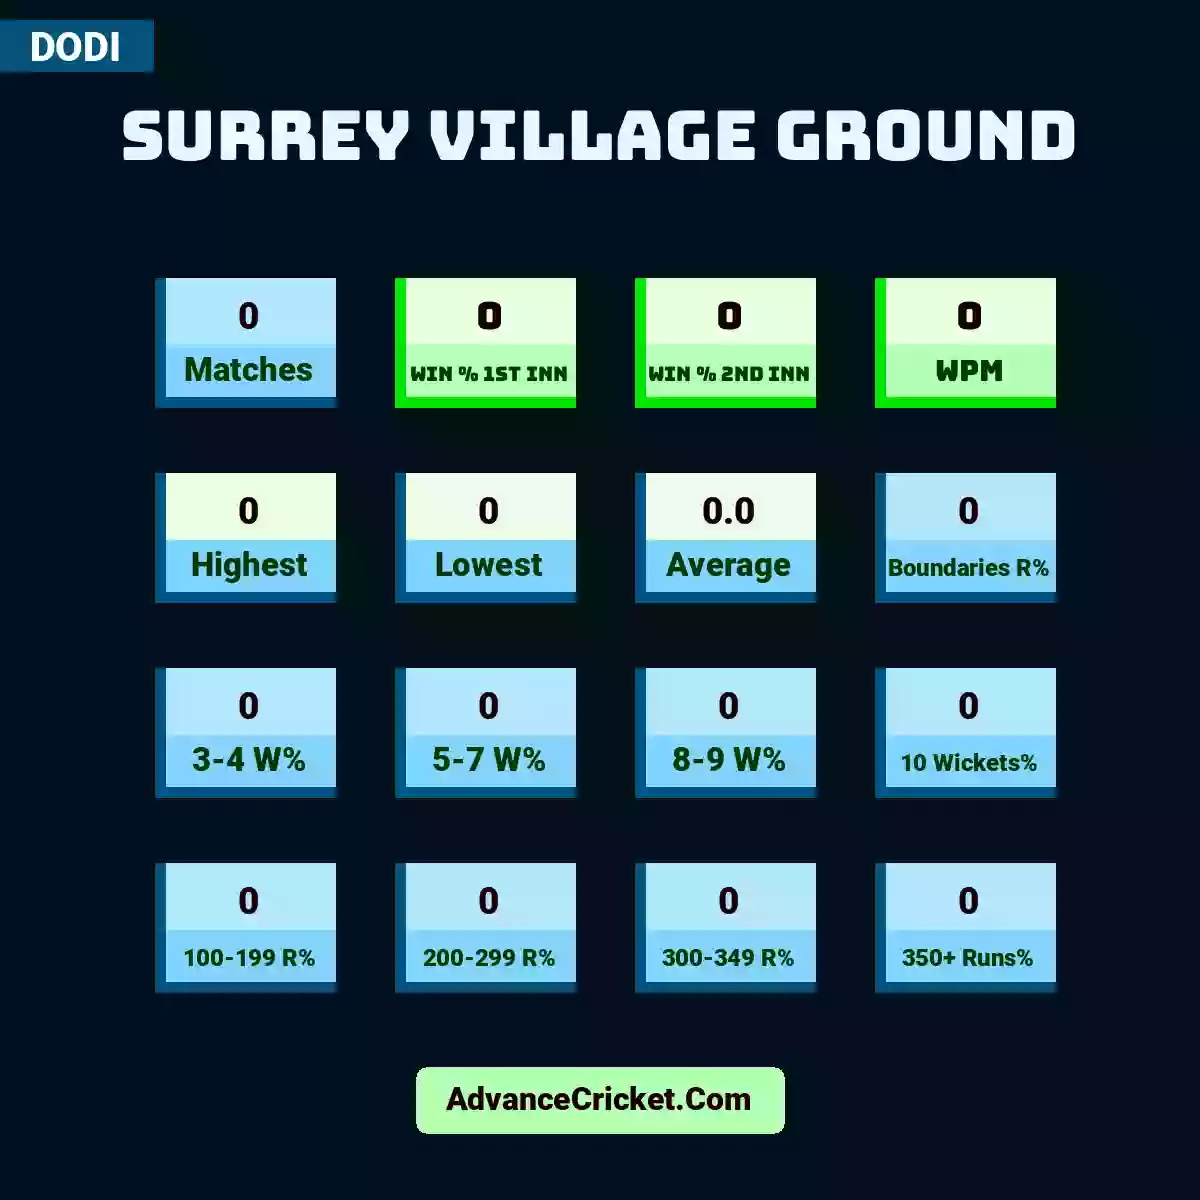 Image showing Surrey Village Ground with Matches: 0, Win % 1st Inn: 0, Win % 2nd Inn: 0, WPM: 0, Highest: 0, Lowest: 0, Average: 0.0, Boundaries R%: 0, 3-4 W%: 0, 5-7 W%: 0, 8-9 W%: 0, 10 Wickets%: 0, 100-199 R%: 0, 200-299 R%: 0, 300-349 R%: 0, 350+ Runs%: 0.